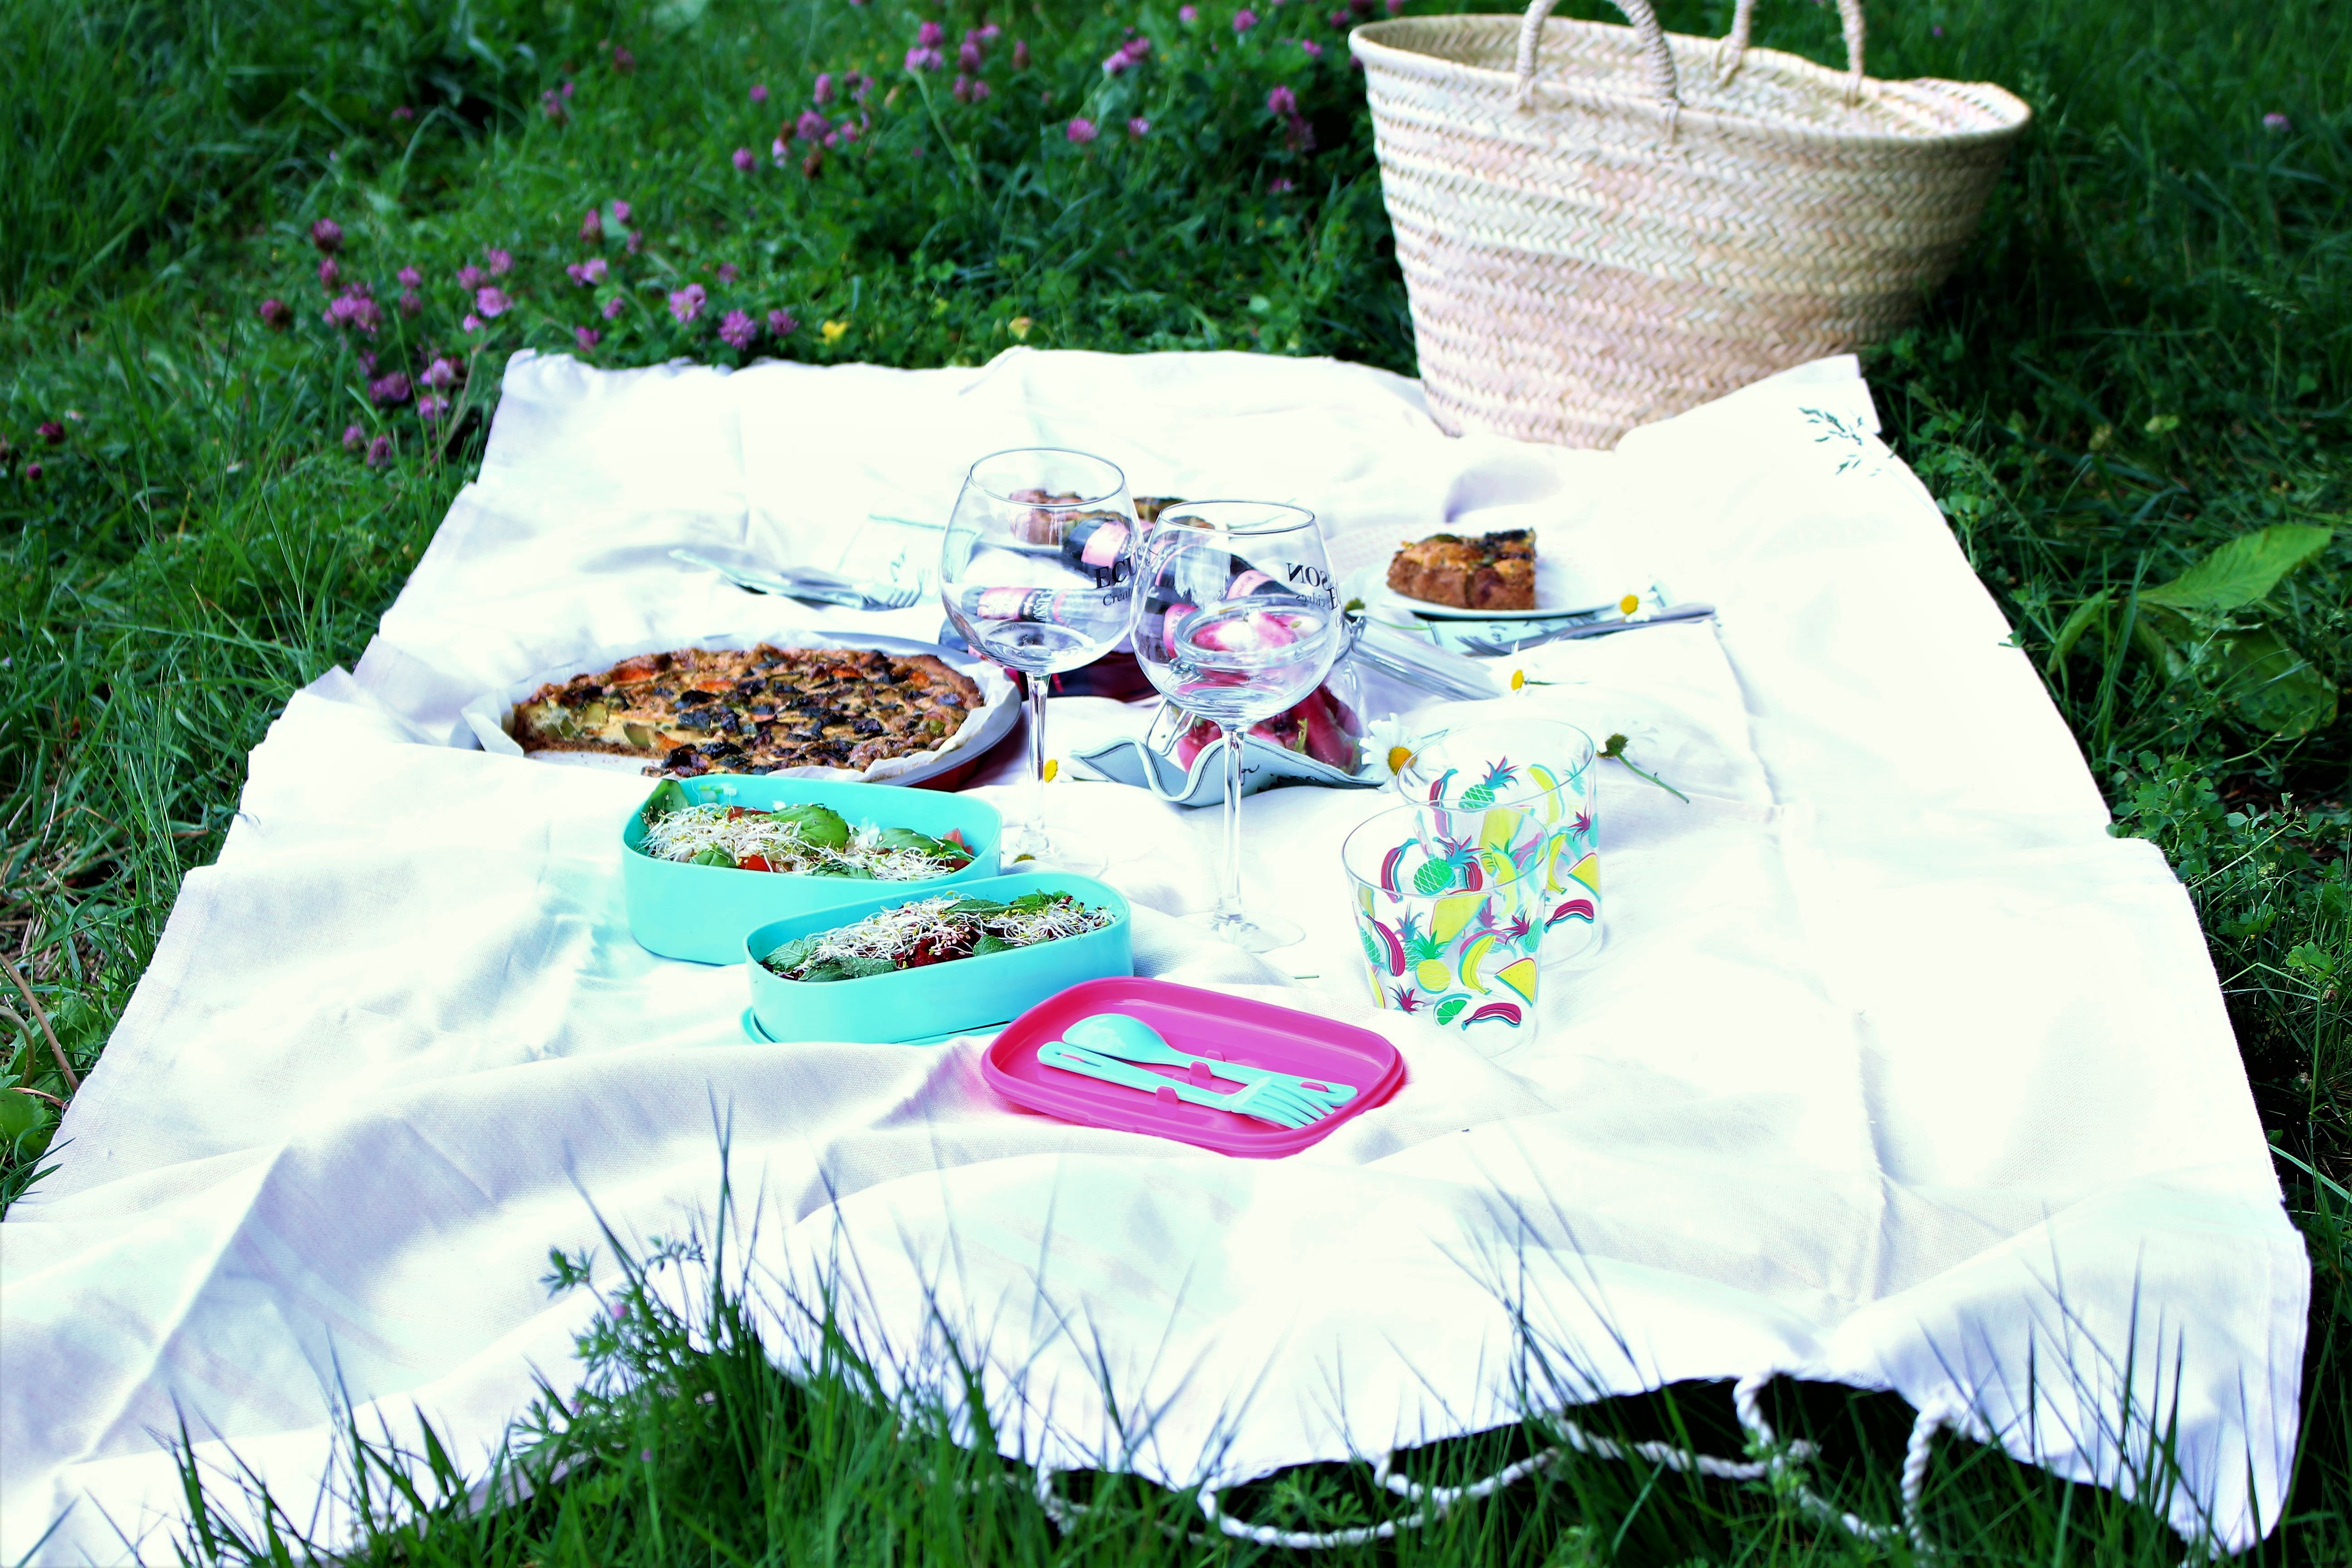 Country picnic:gluten-free &lactose-free menu 